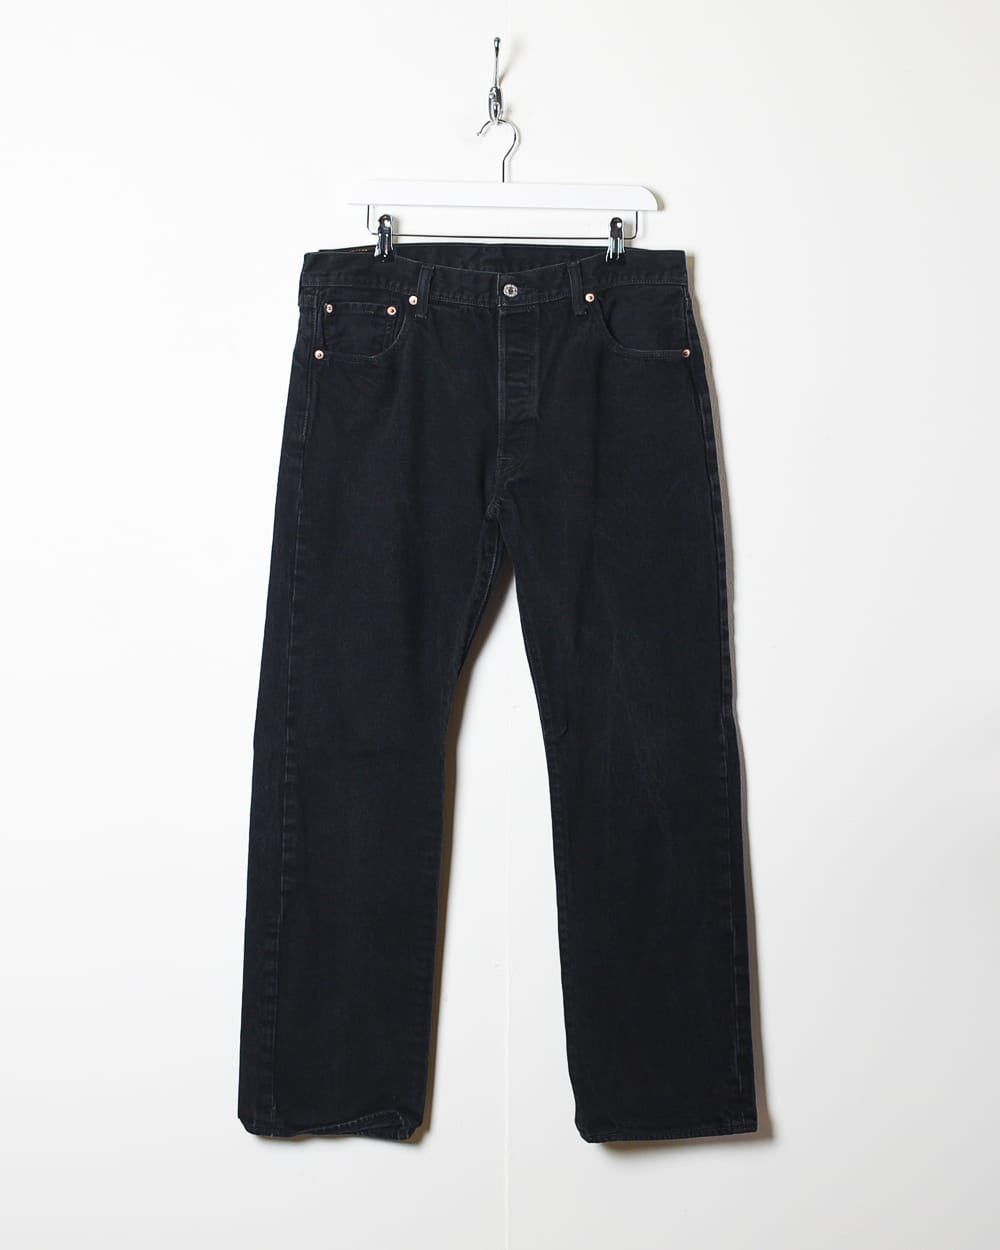 Black Levi's 501 Jeans - W35 L30